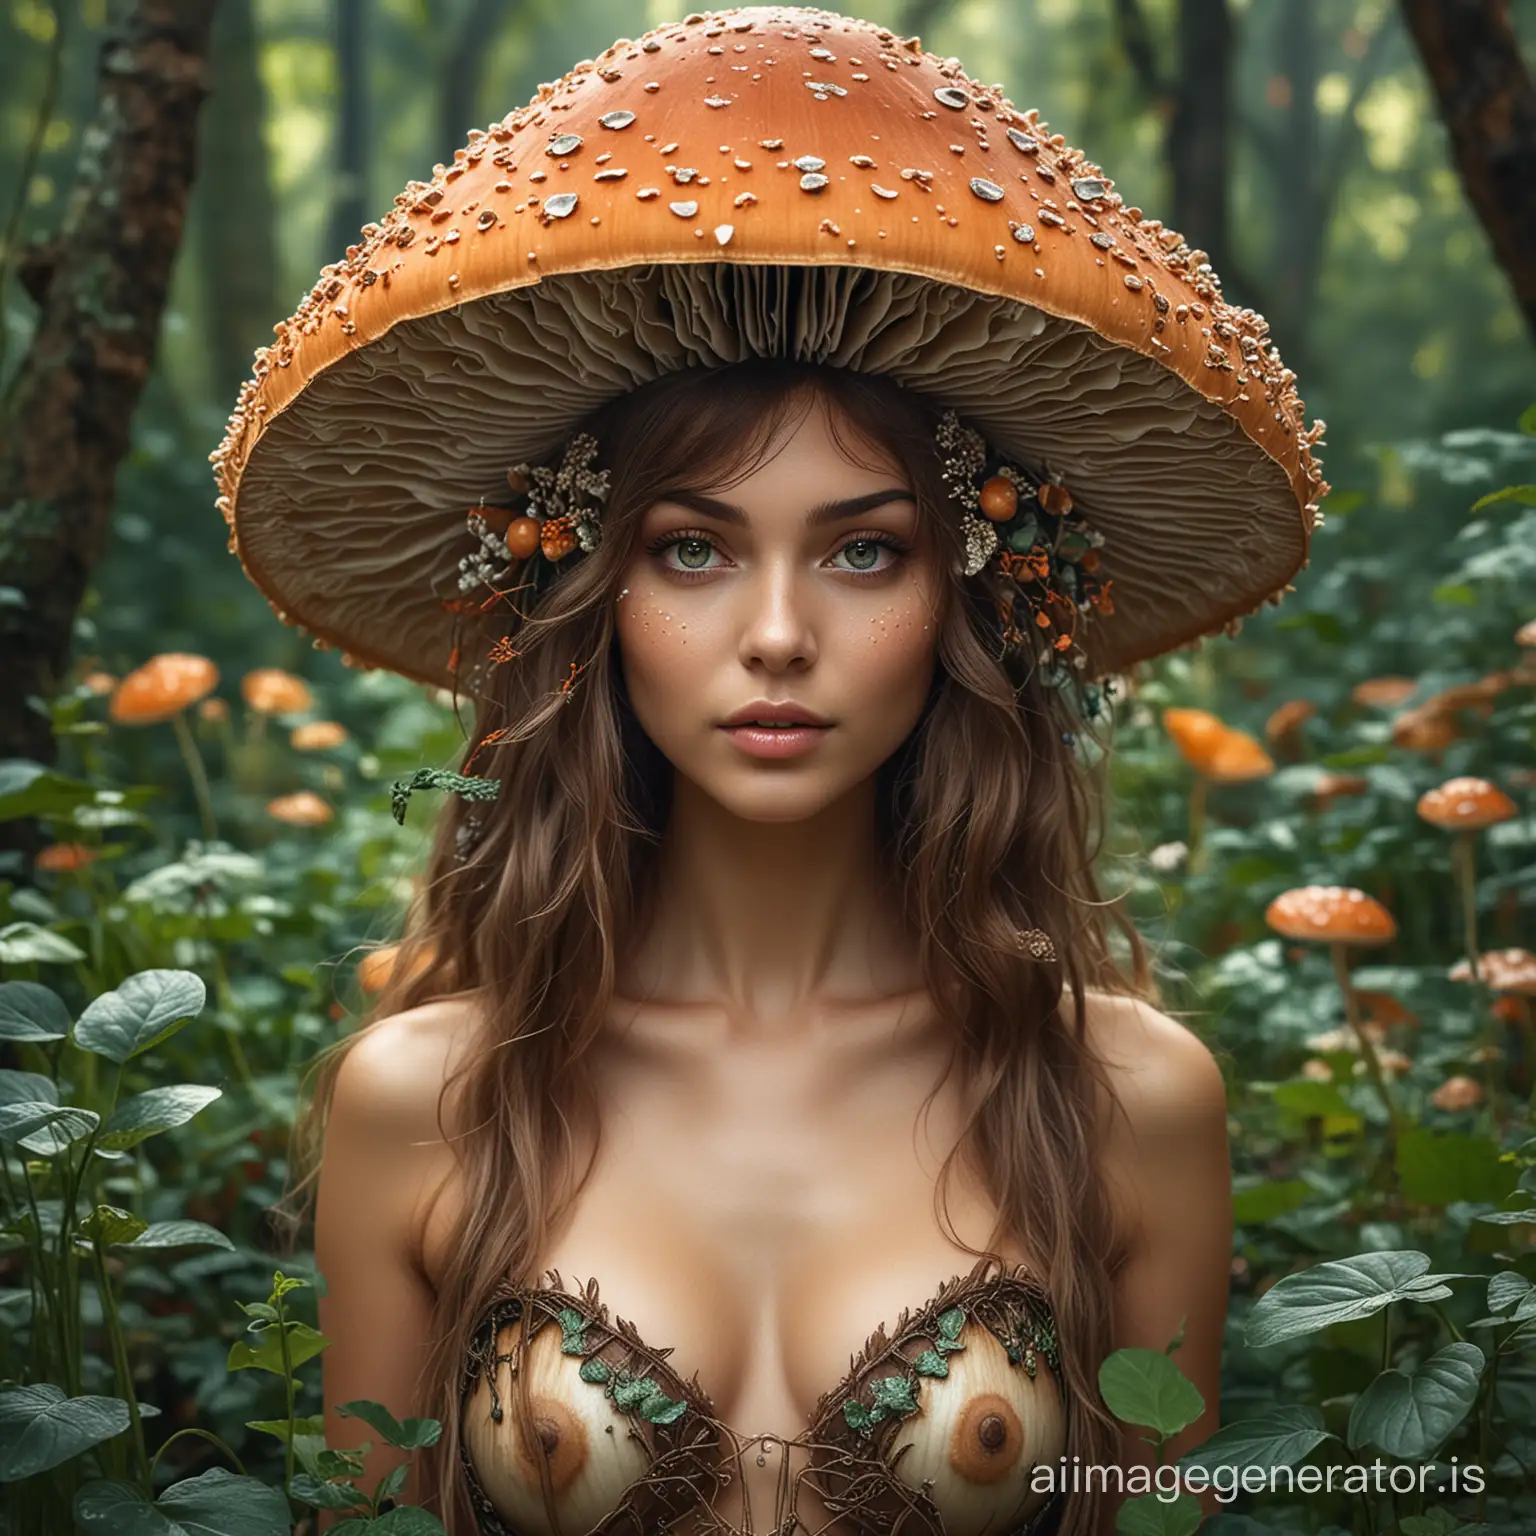 Enchanting-Mushroom-Nymph-Controlling-Nature